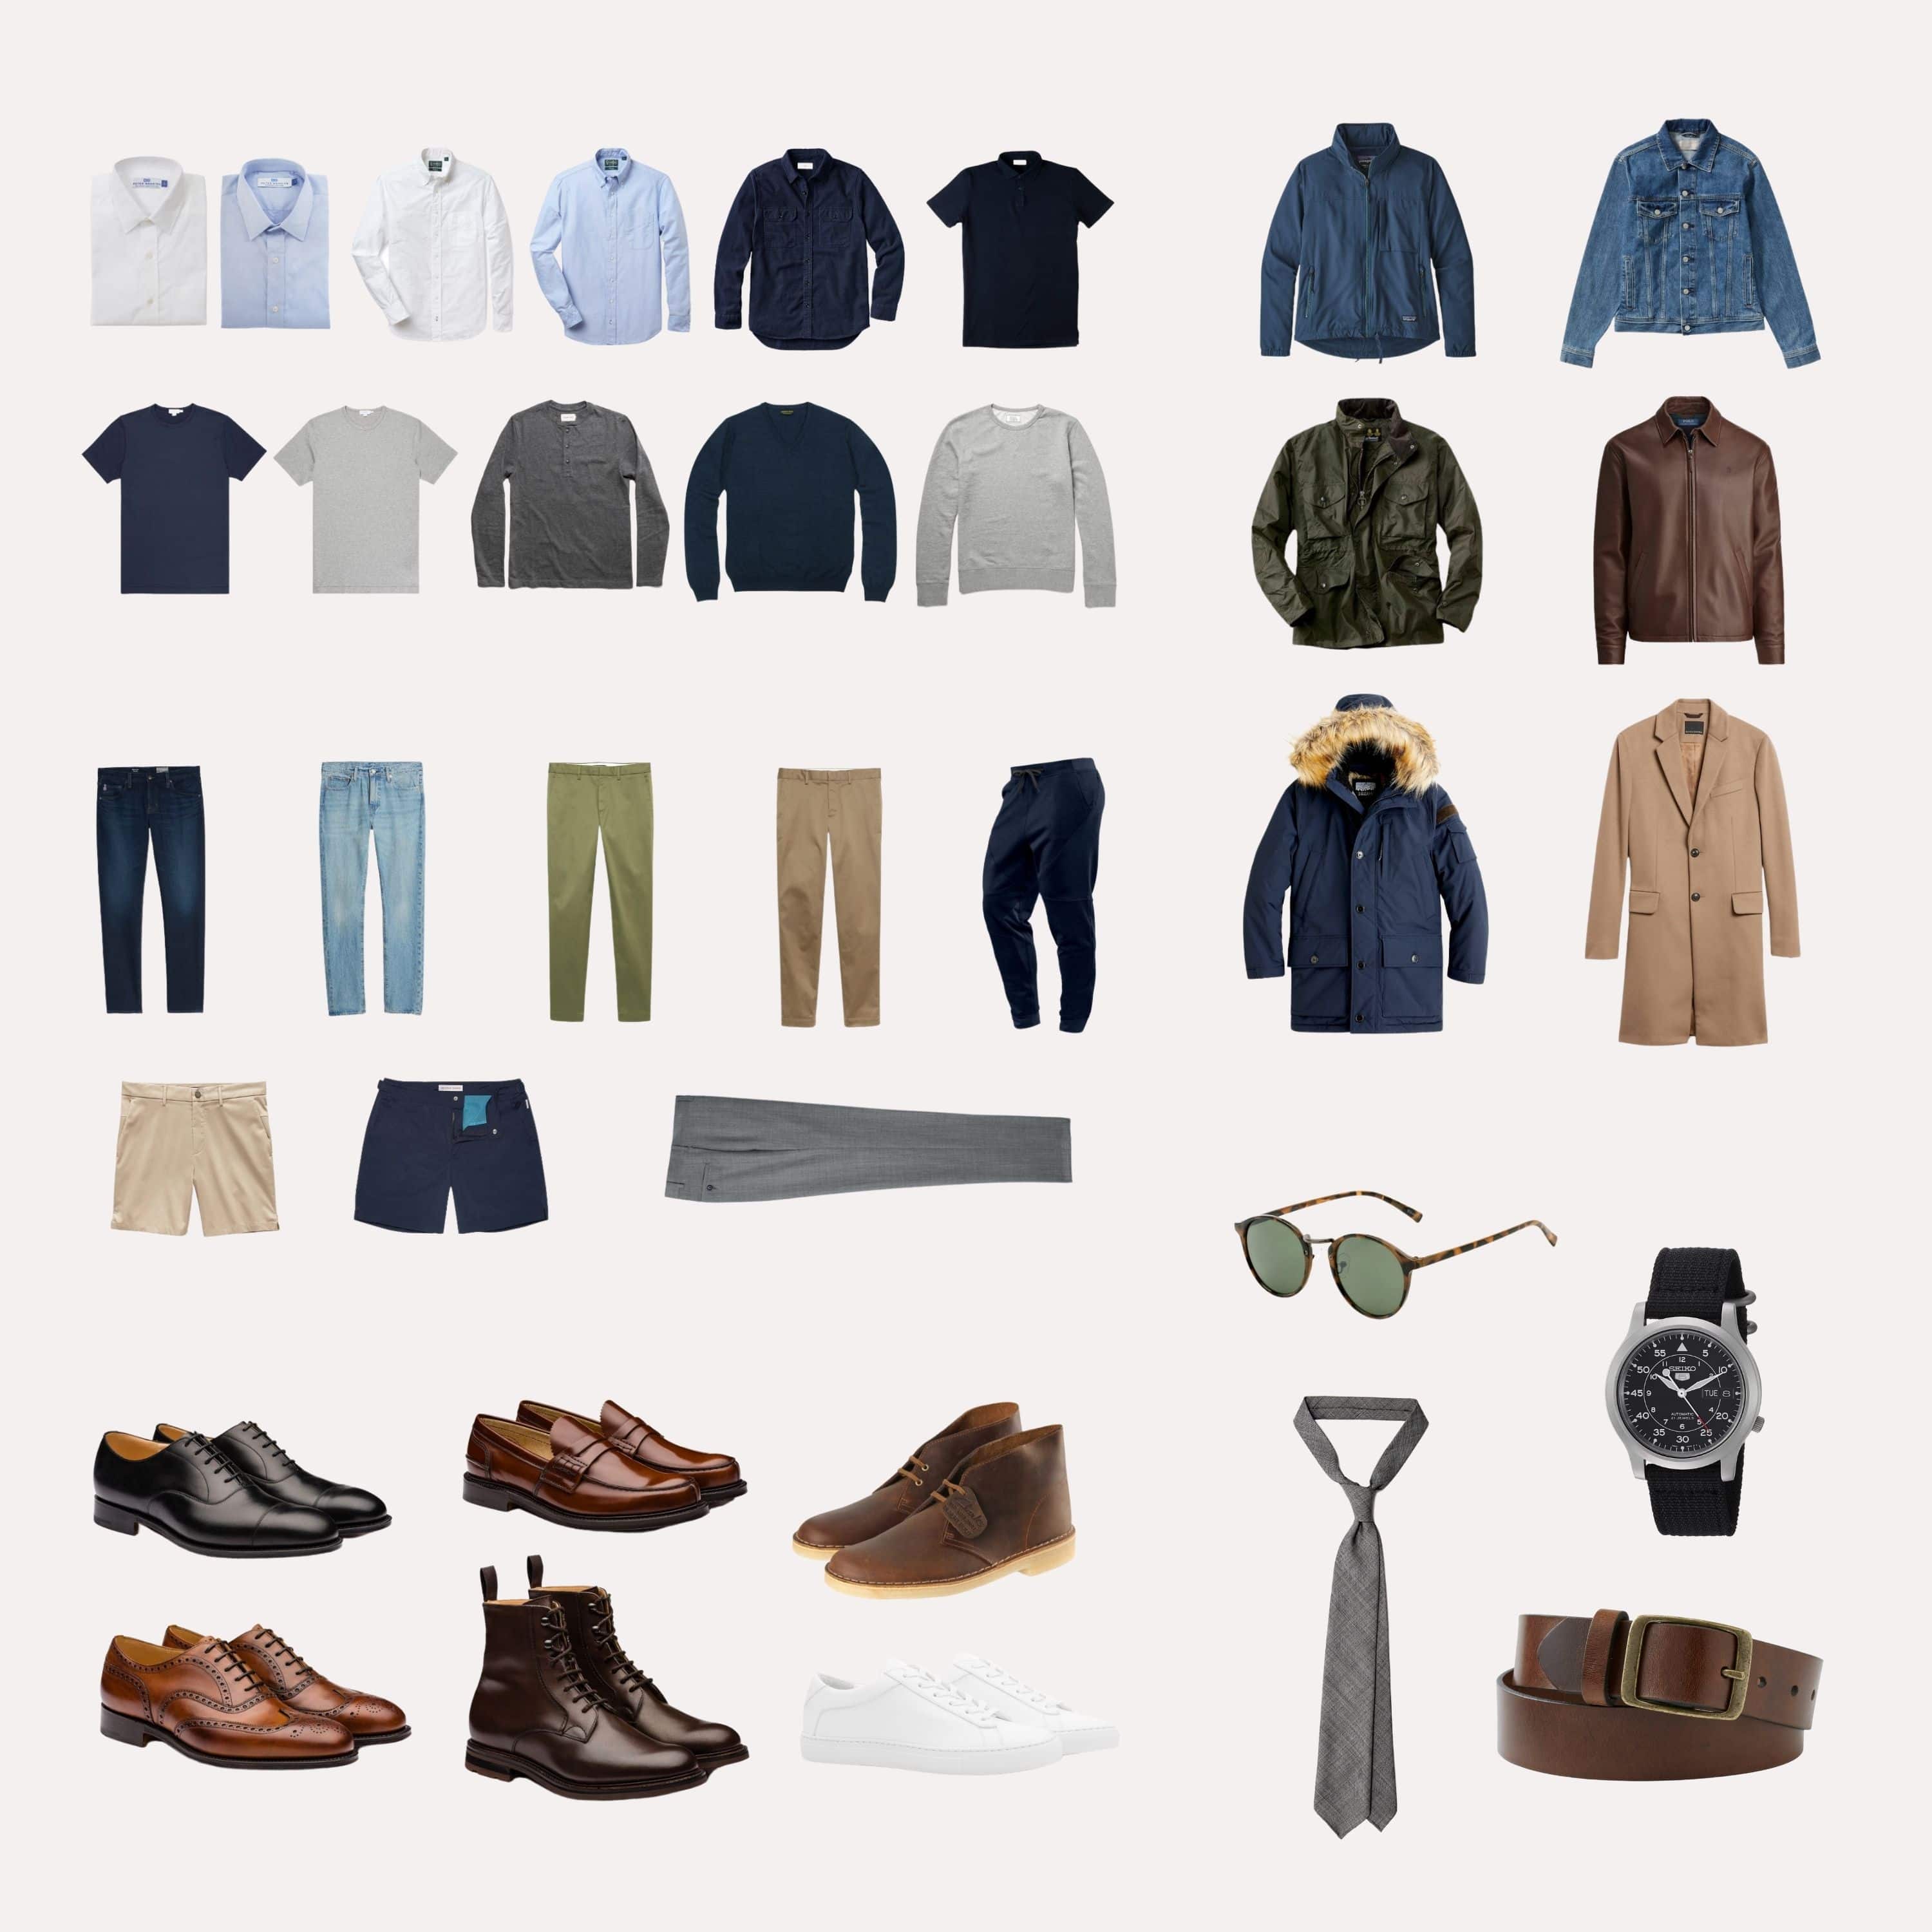 Capsule Wardrobe Essentials: 10 Must-Have Minimalist Clothing